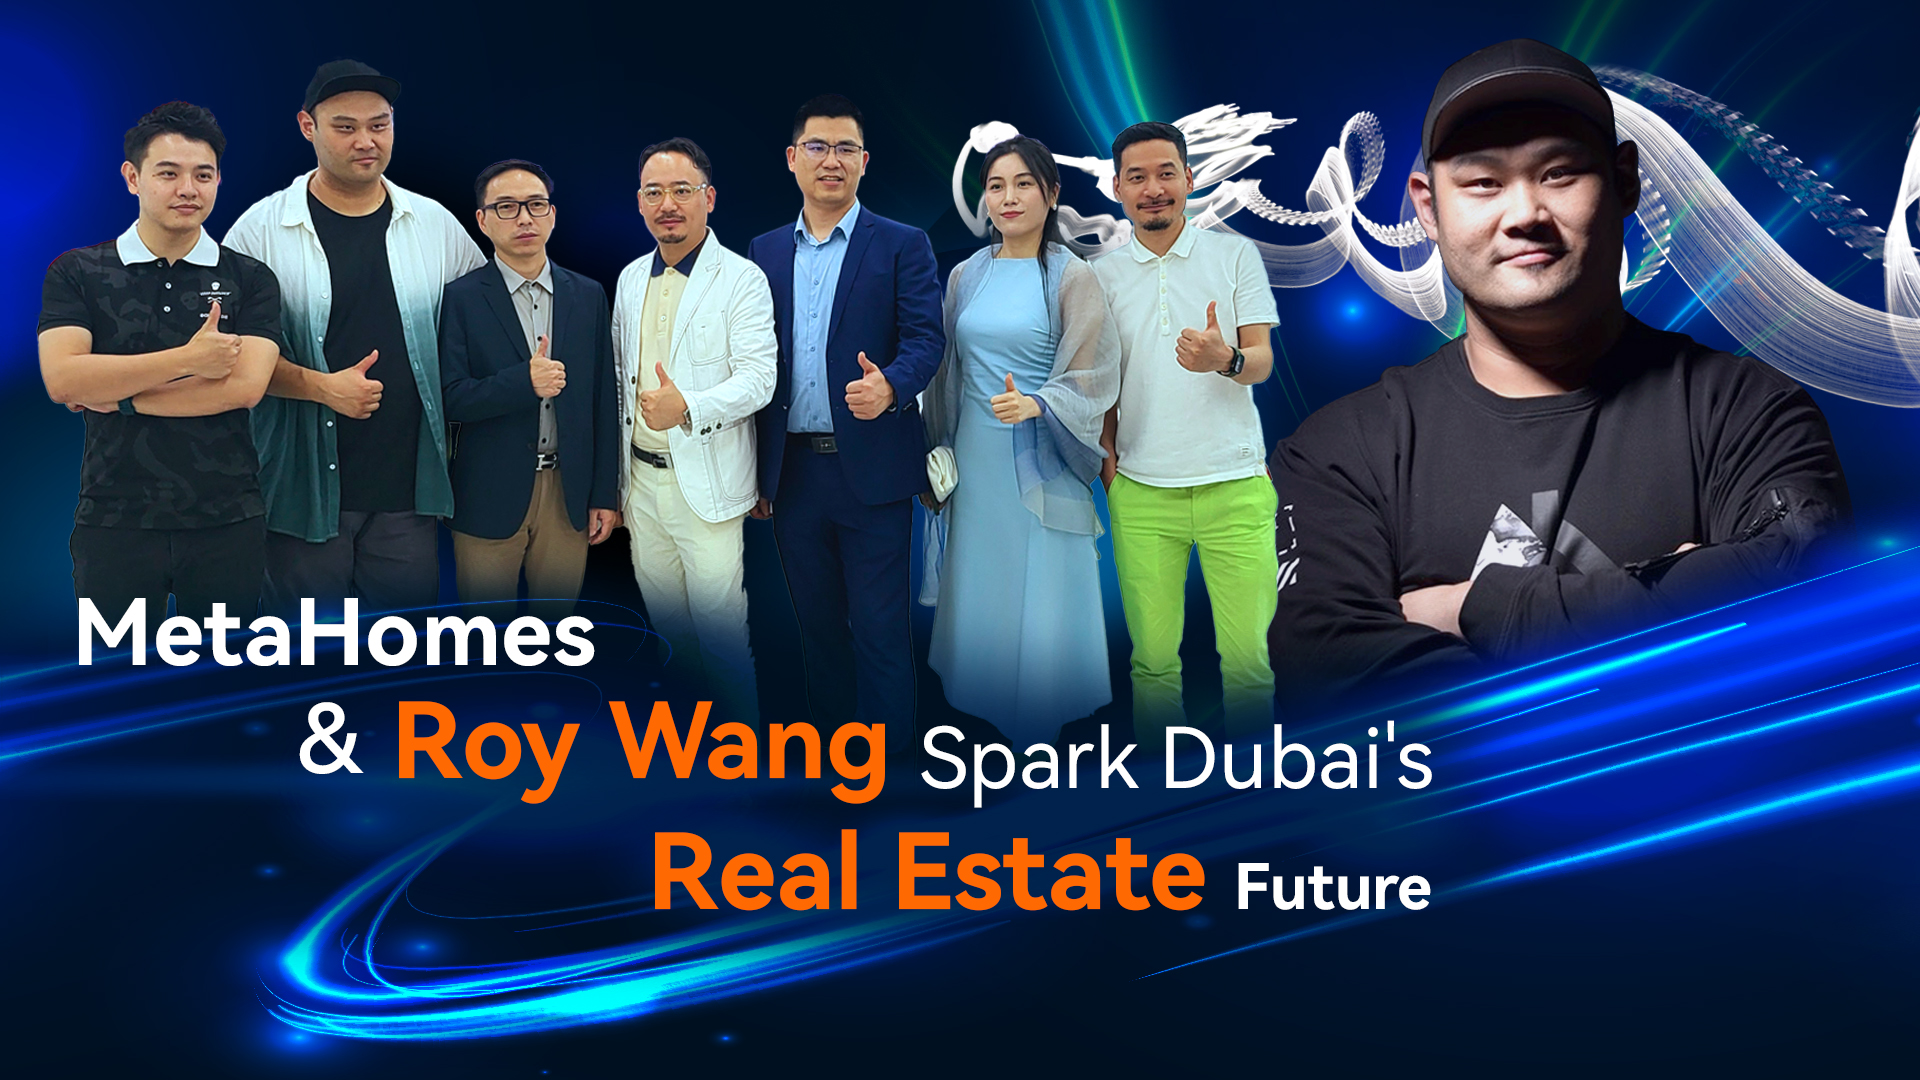 MetaHomes & Roy Wang Spark Dubai's real estate Future